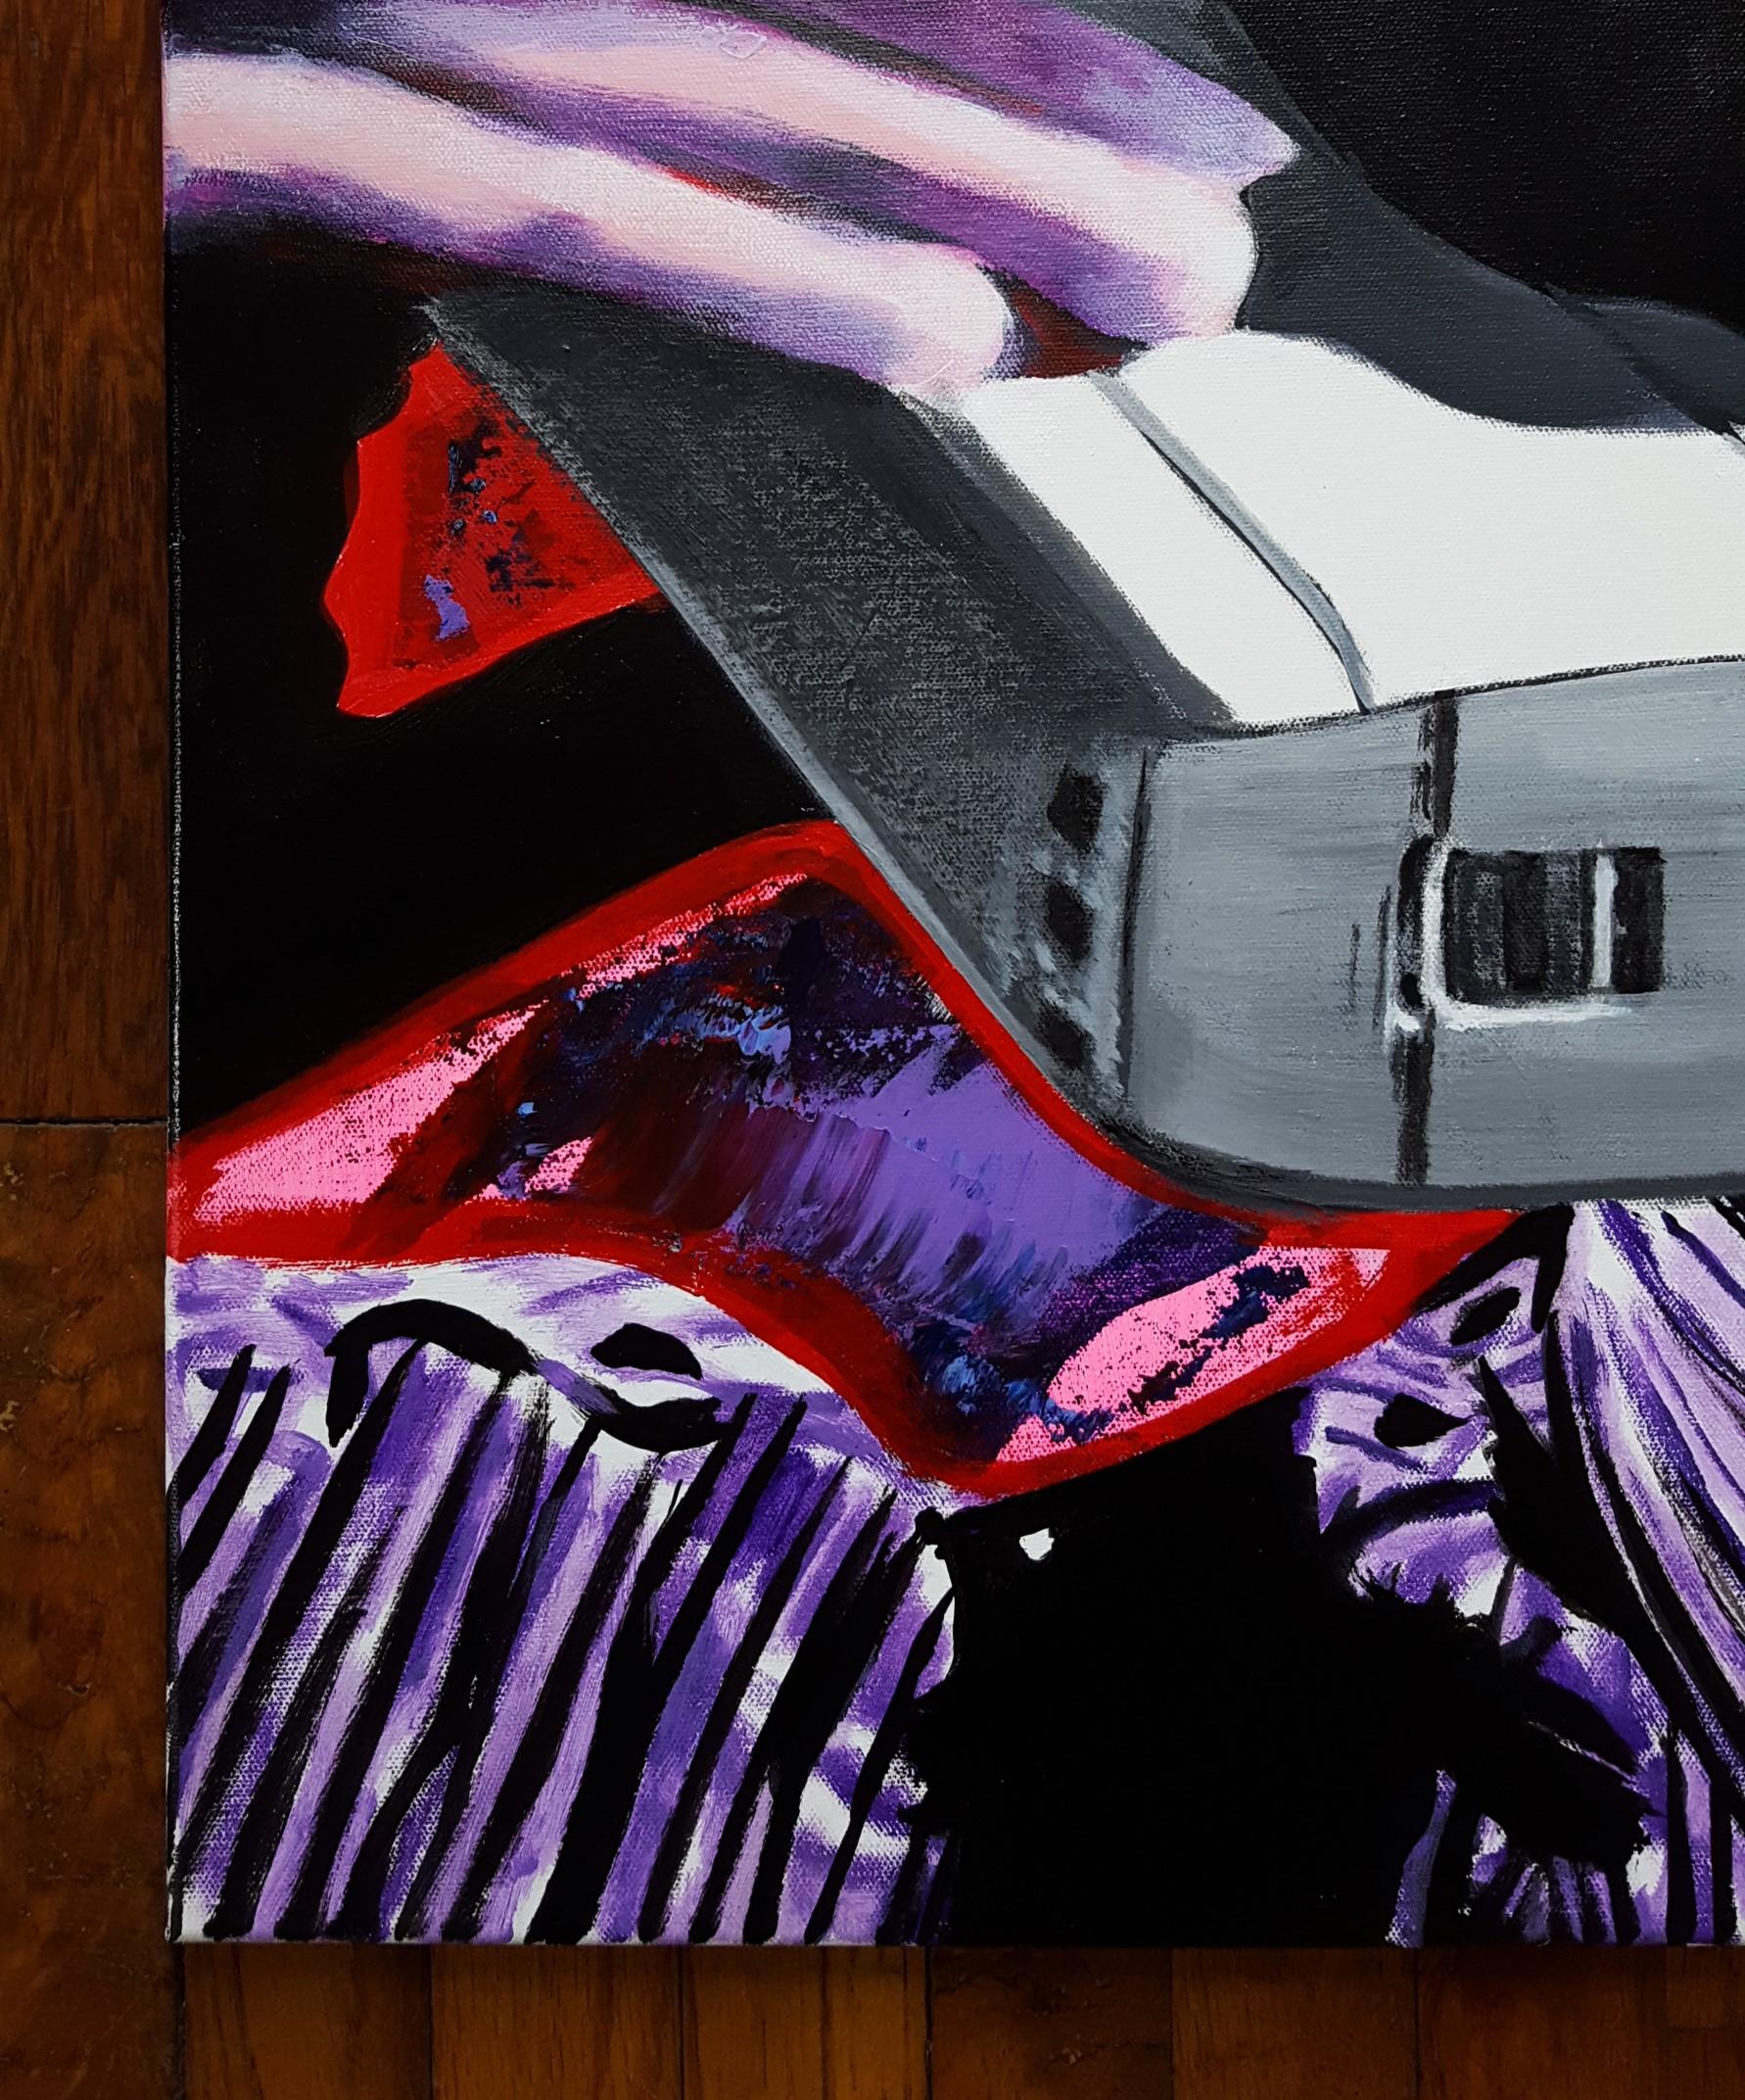 Patrick Bateman Icon (American Psycho) - Painting by Jack Graves III